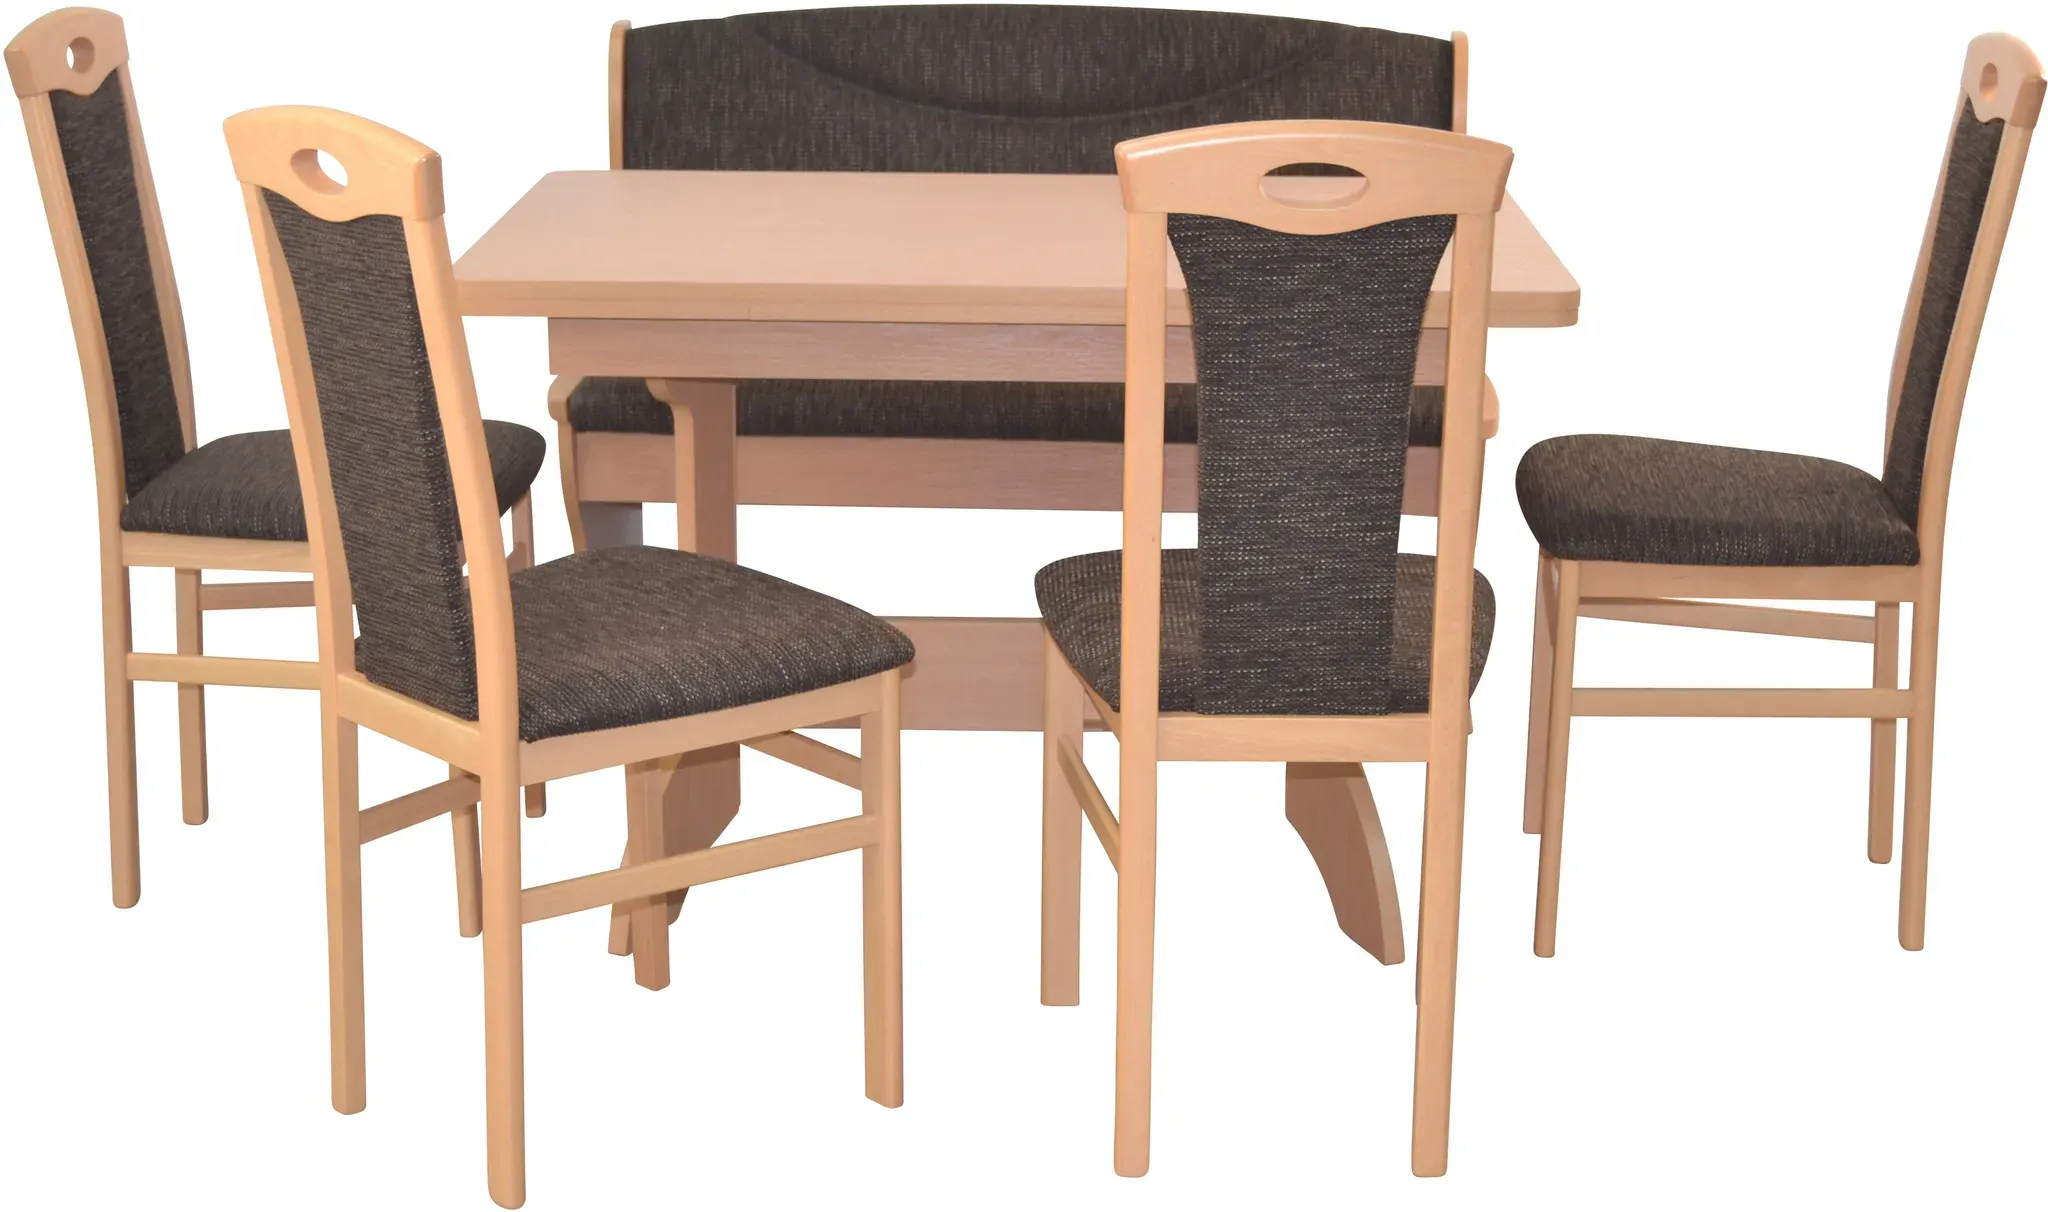 Essgruppe HOFMANN LIVING AND MORE "6tlg. Tischgruppe" Sitzmöbel-Sets Gr. B/H/T: 45 cm x 95 cm x 48 cm, Stoff, Ansteckplatten, braun (schoko, schoko, buche, nachbildung) Essgruppen Stühle montiert